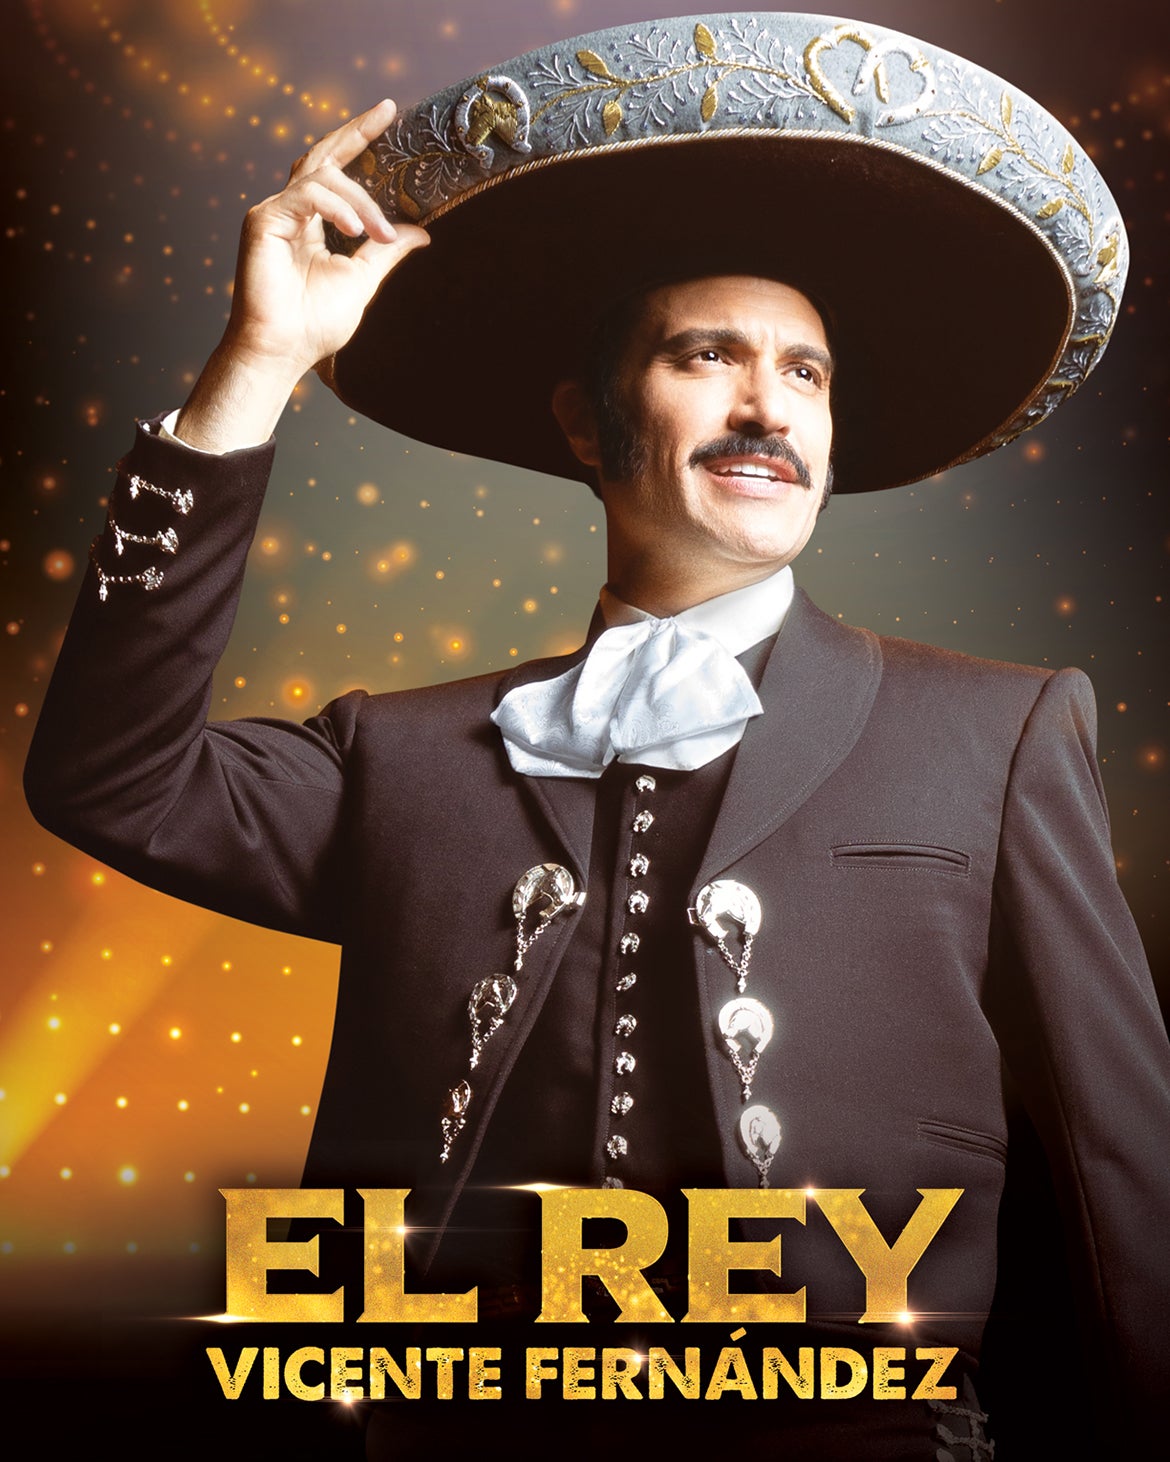 TV ratings for El Rey, Vicente Fernández in Russia. Netflix TV series